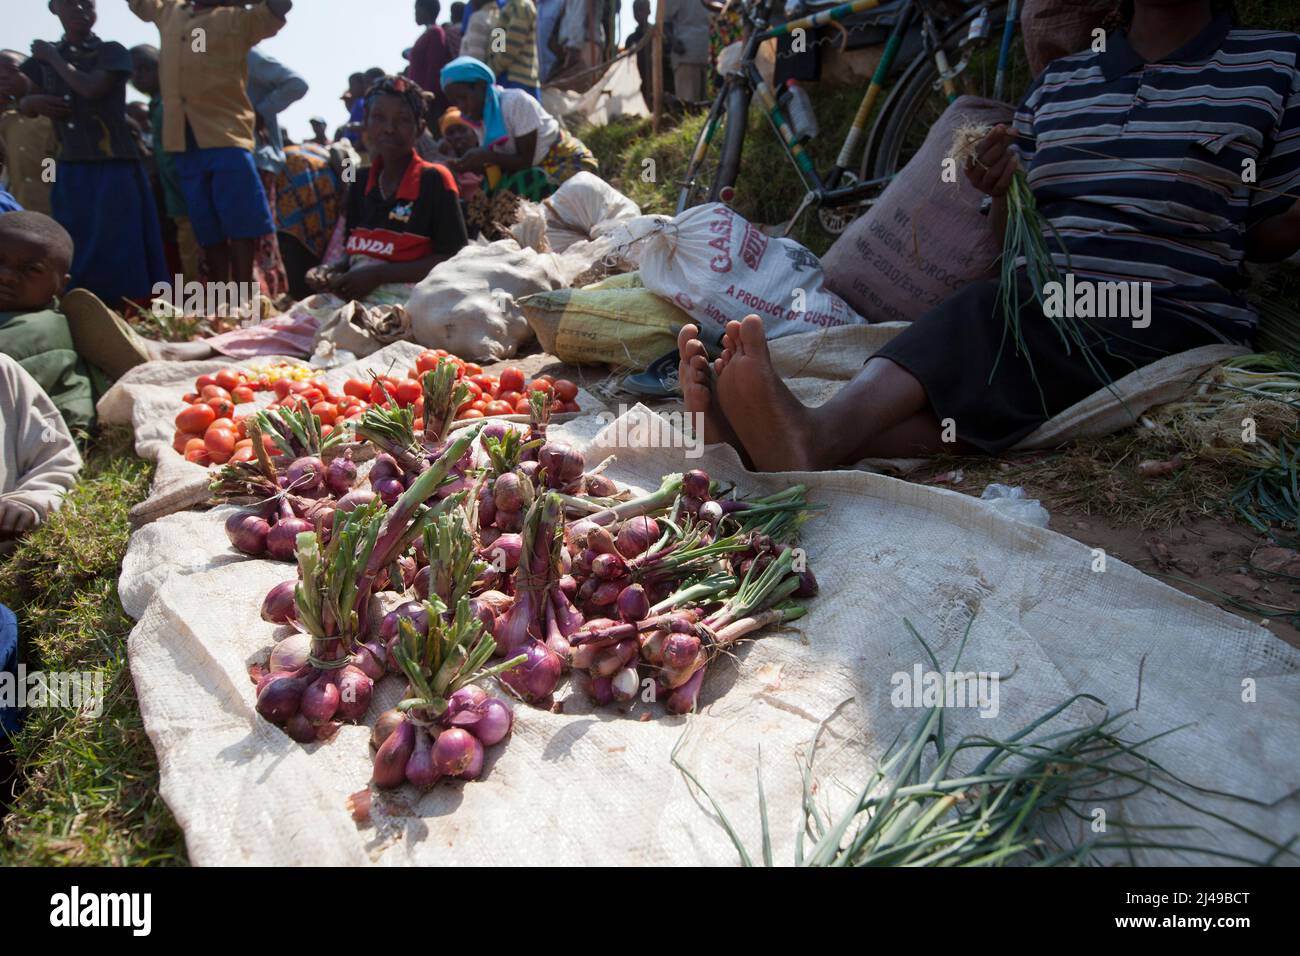 Bushoka mercado de la aldea, Gasiza célula, Kivuruga sector, Gakenke disrict. Fotografía de Mike Goldwater Foto de stock